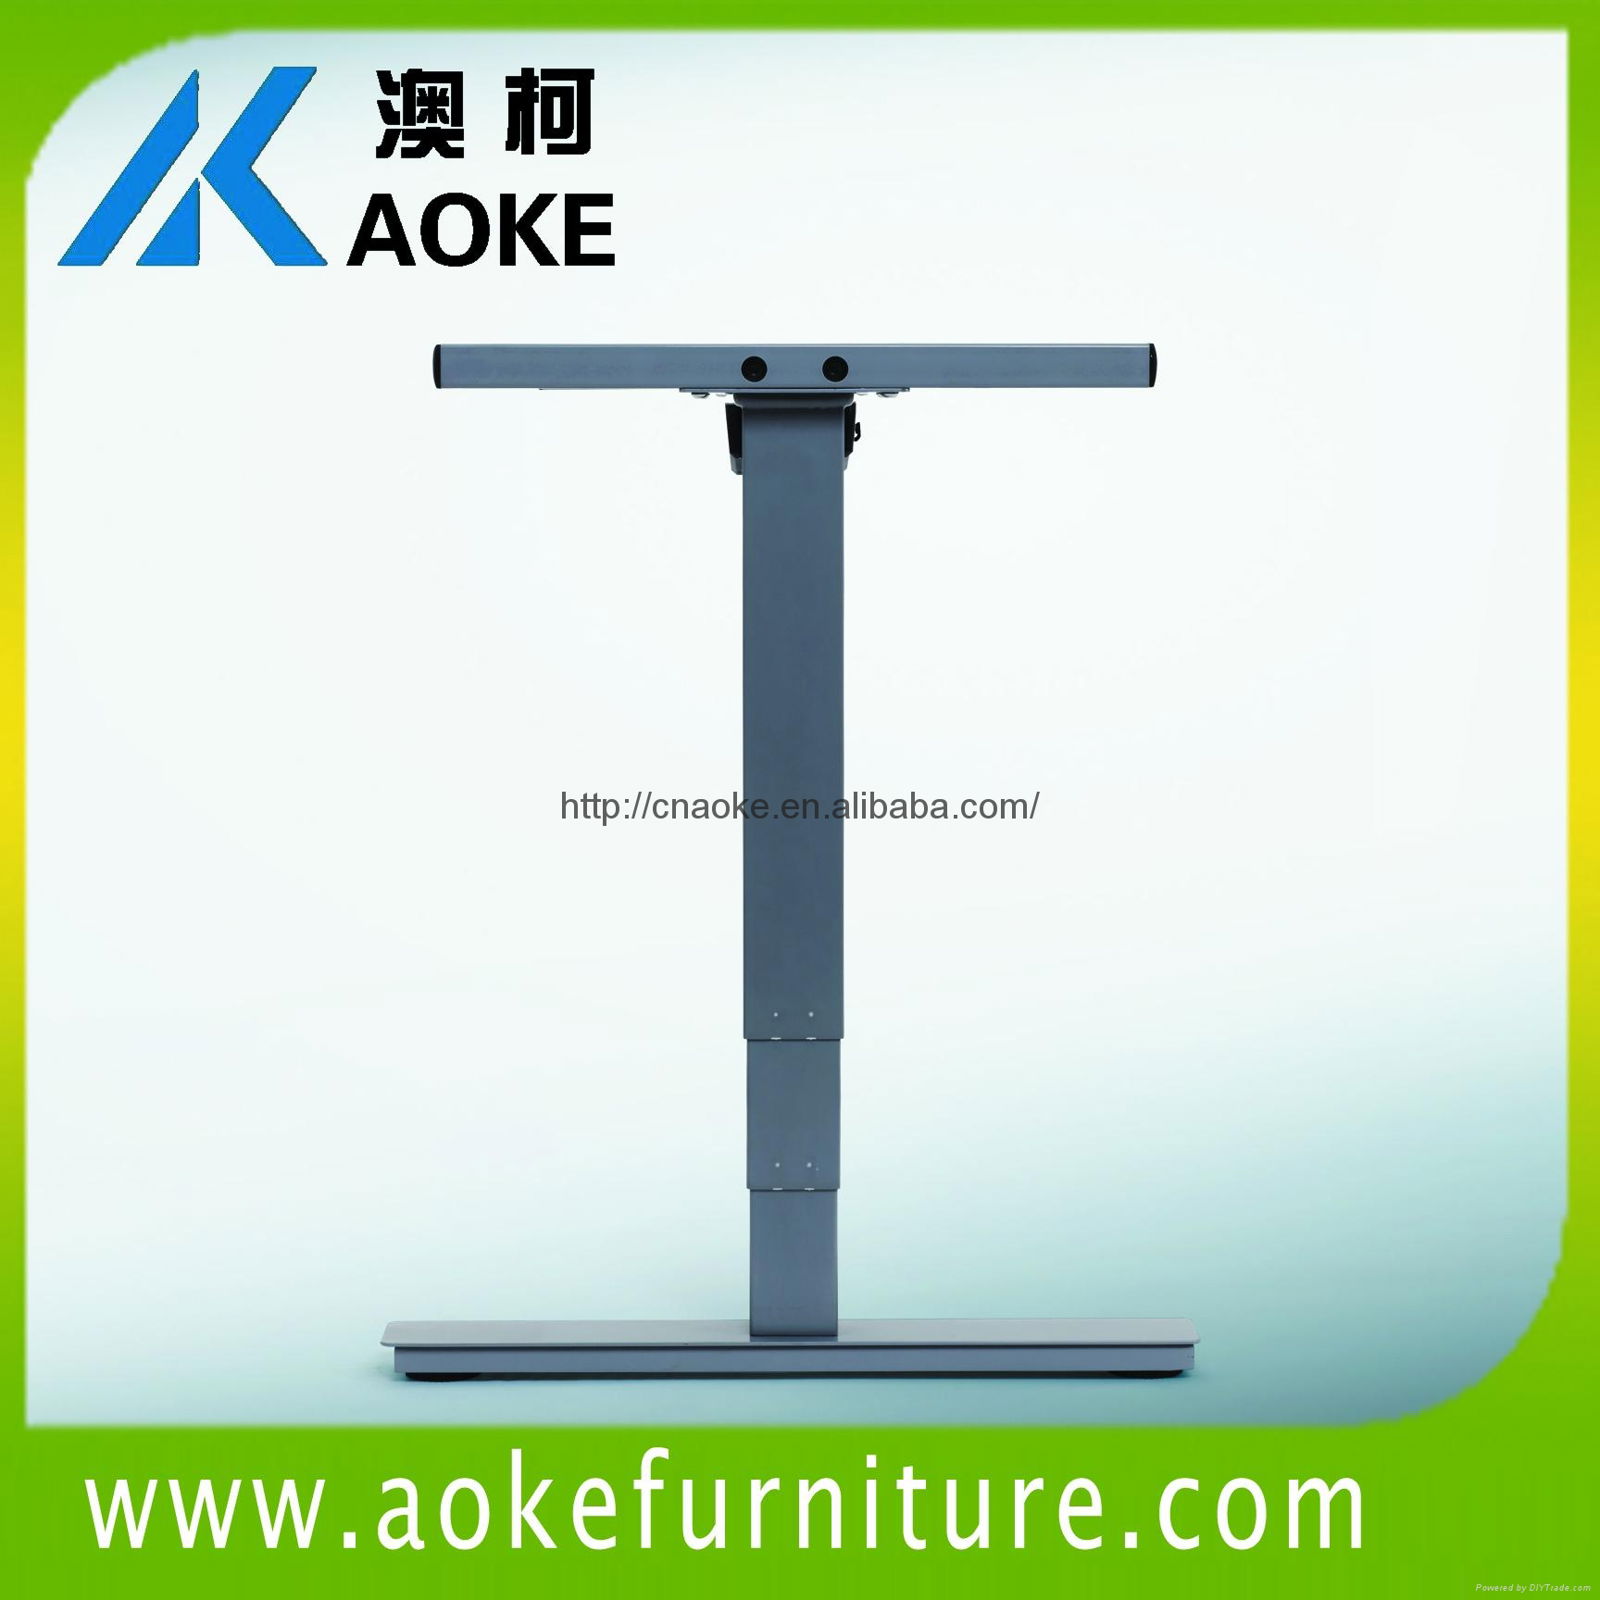 AOKE AK2RT-RS2 electric adjustable standing desk 5